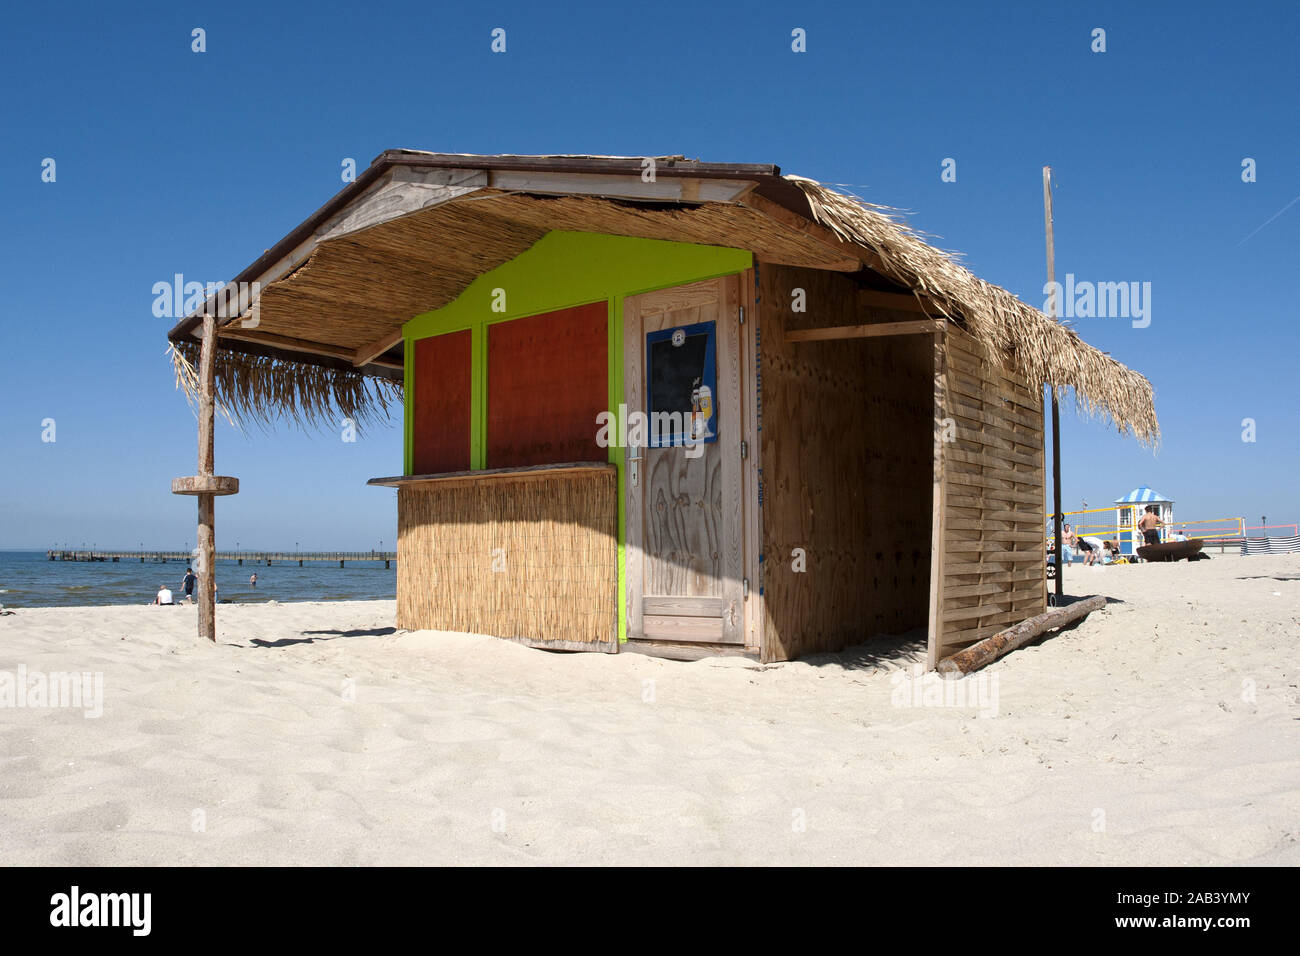 Geschlossene Strandbar am Strand von Lubmin |Closed beach bar on the beach of Lubmin| Stock Photo